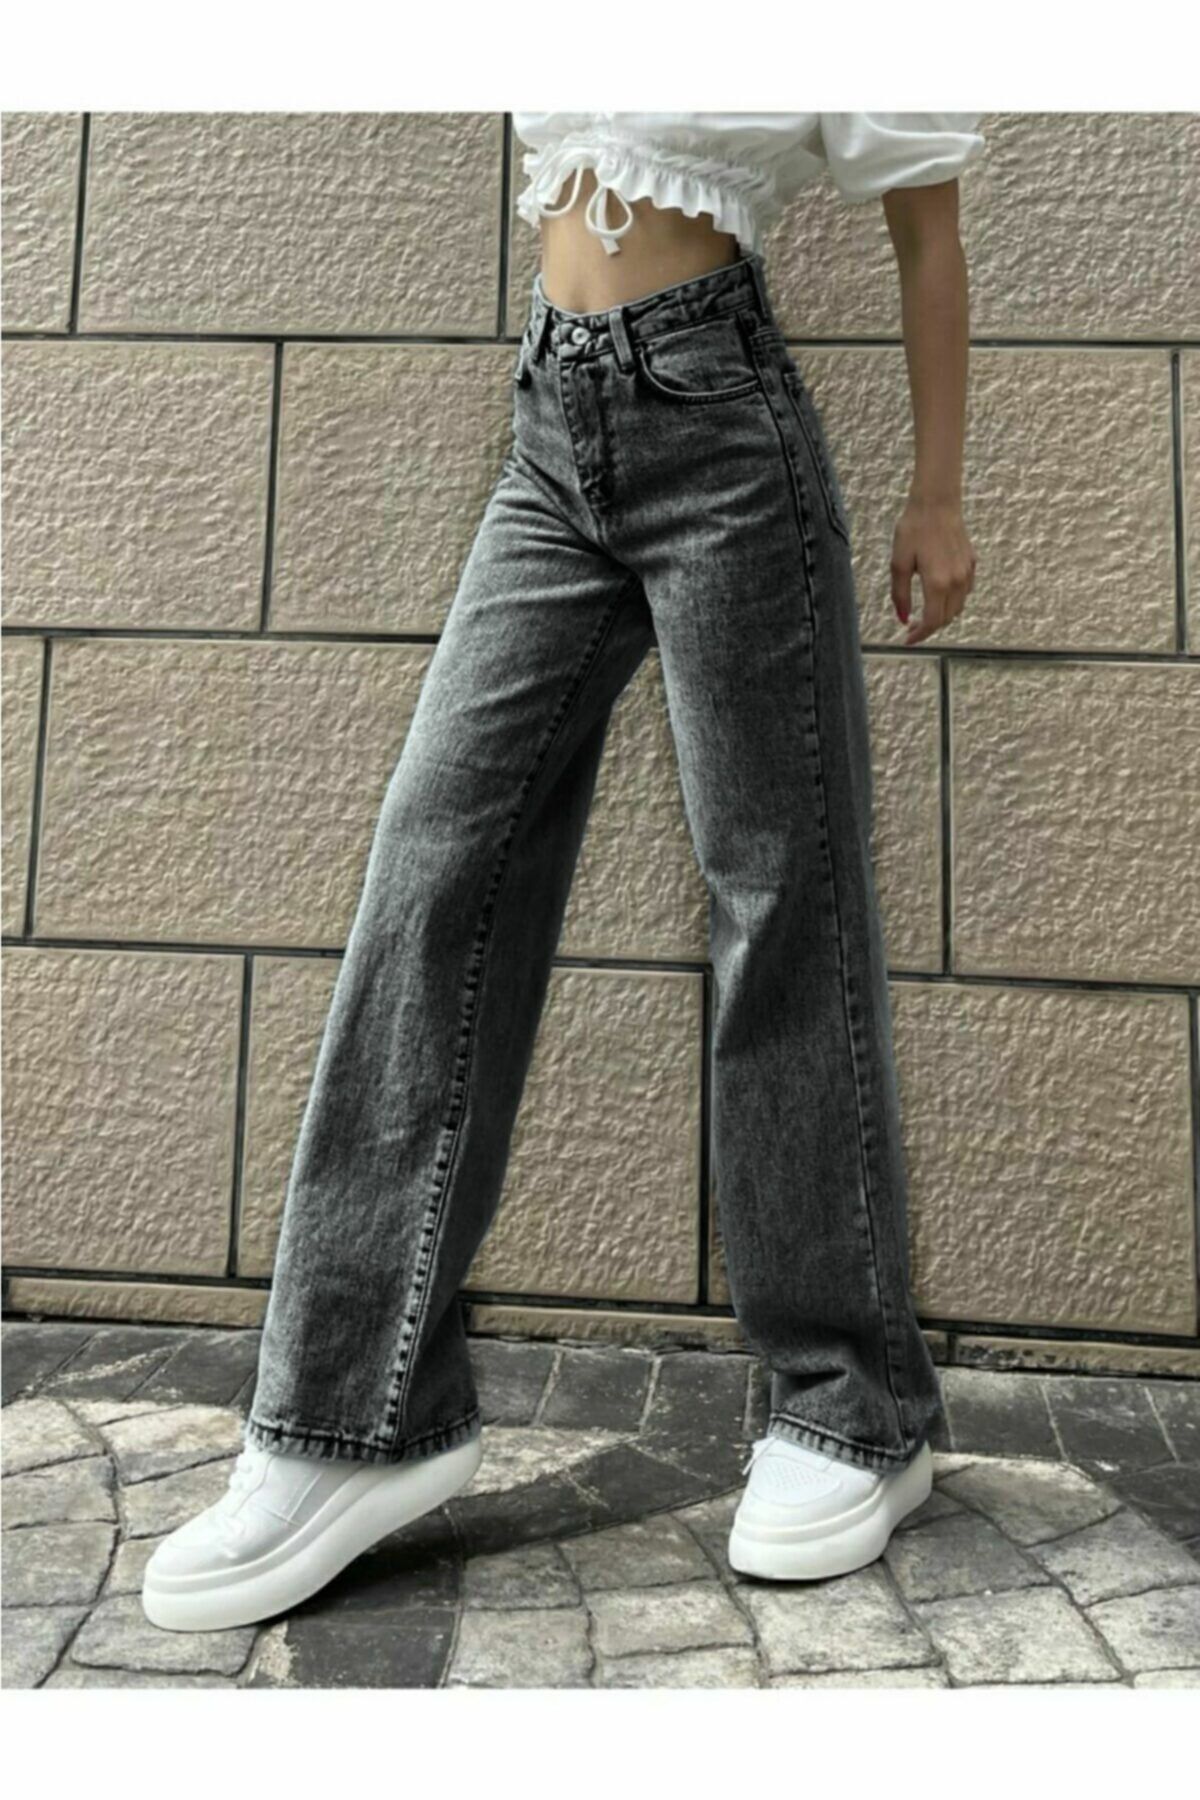 Maystore Polina Extra Yüksek Likralı Solmaz Füme Salaş Jeans Palazzo Pantolon (SÜPER YÜKSEK SOLMAYAN)